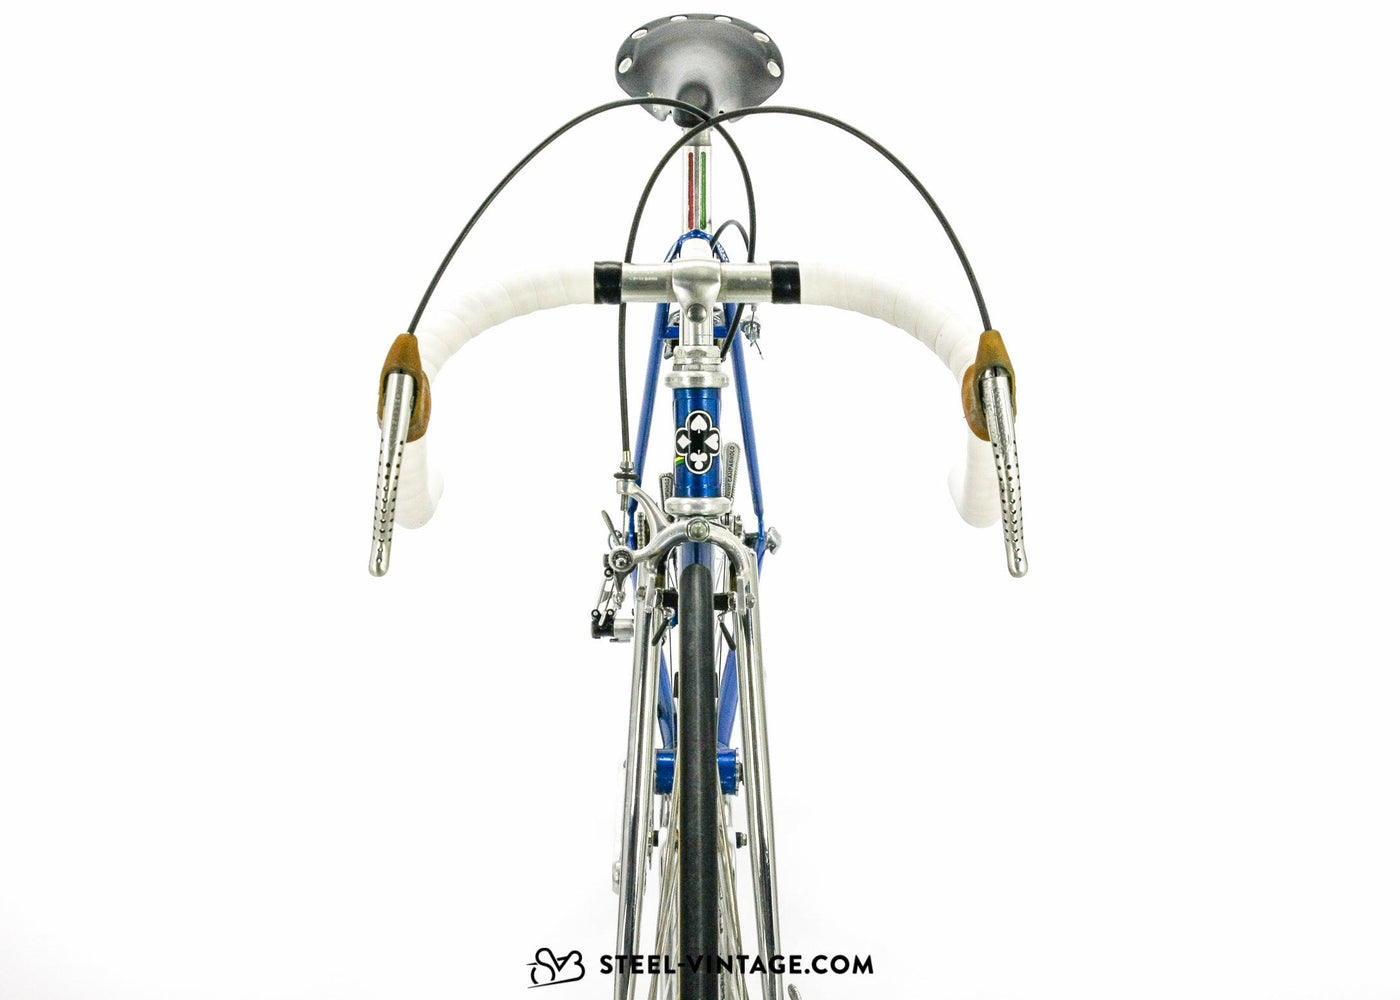 Ciöcc Classic Road Bike 1980s - Steel Vintage Bikes